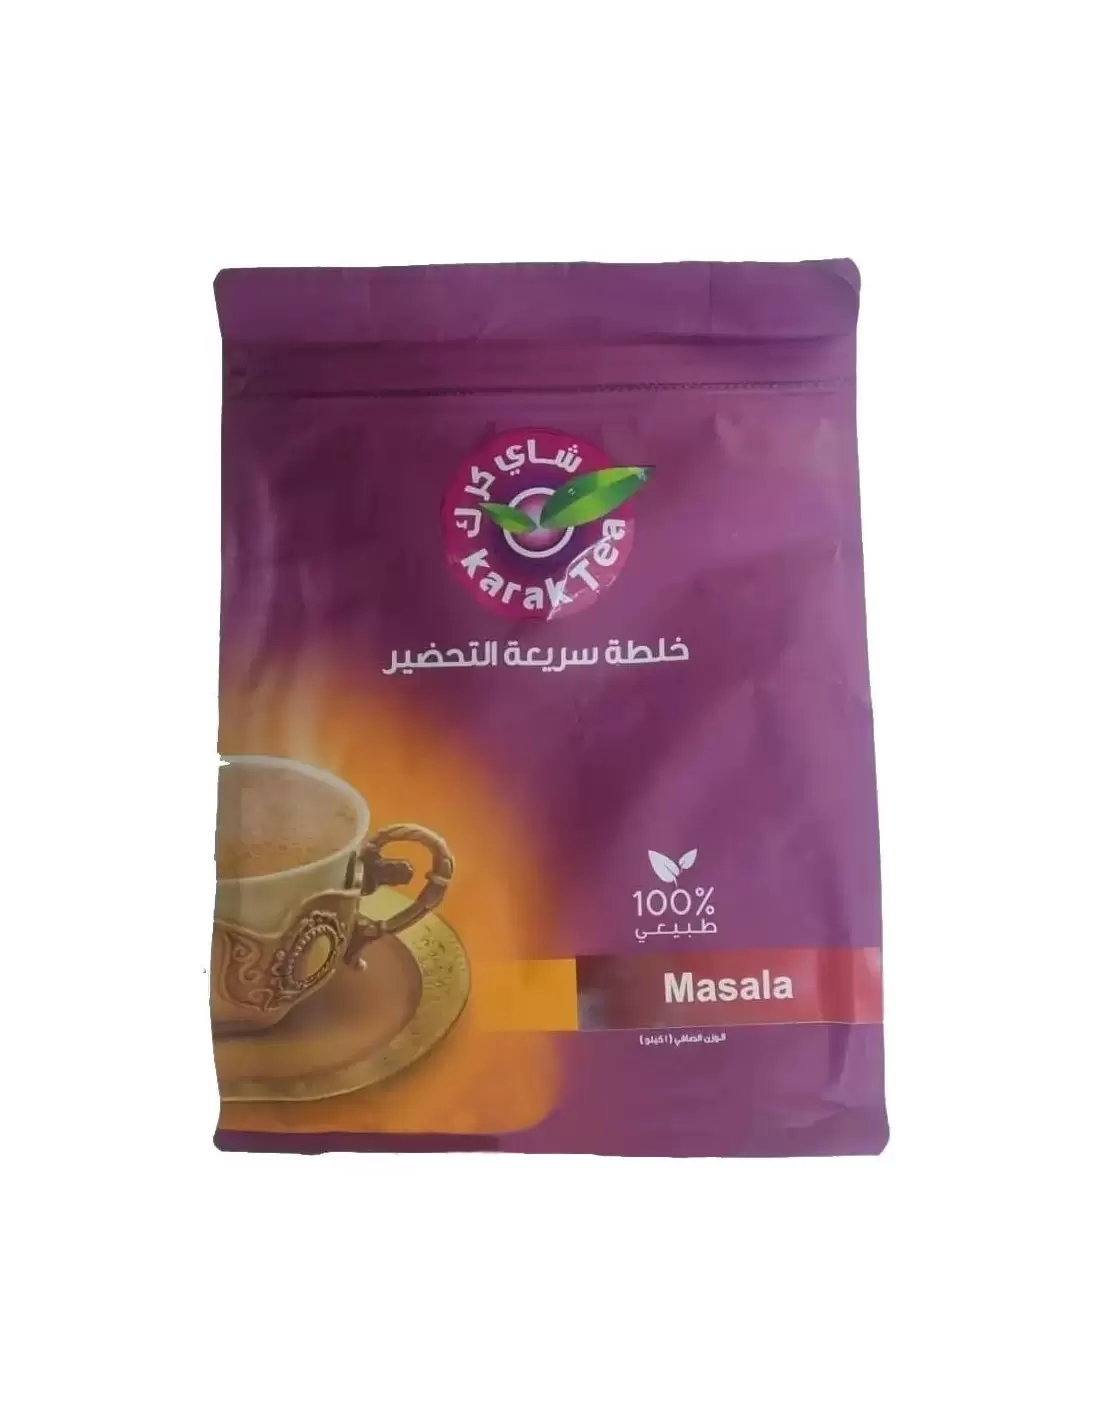 شیر چای ماسالا کرک Karak وزن 1 کیلوگرم